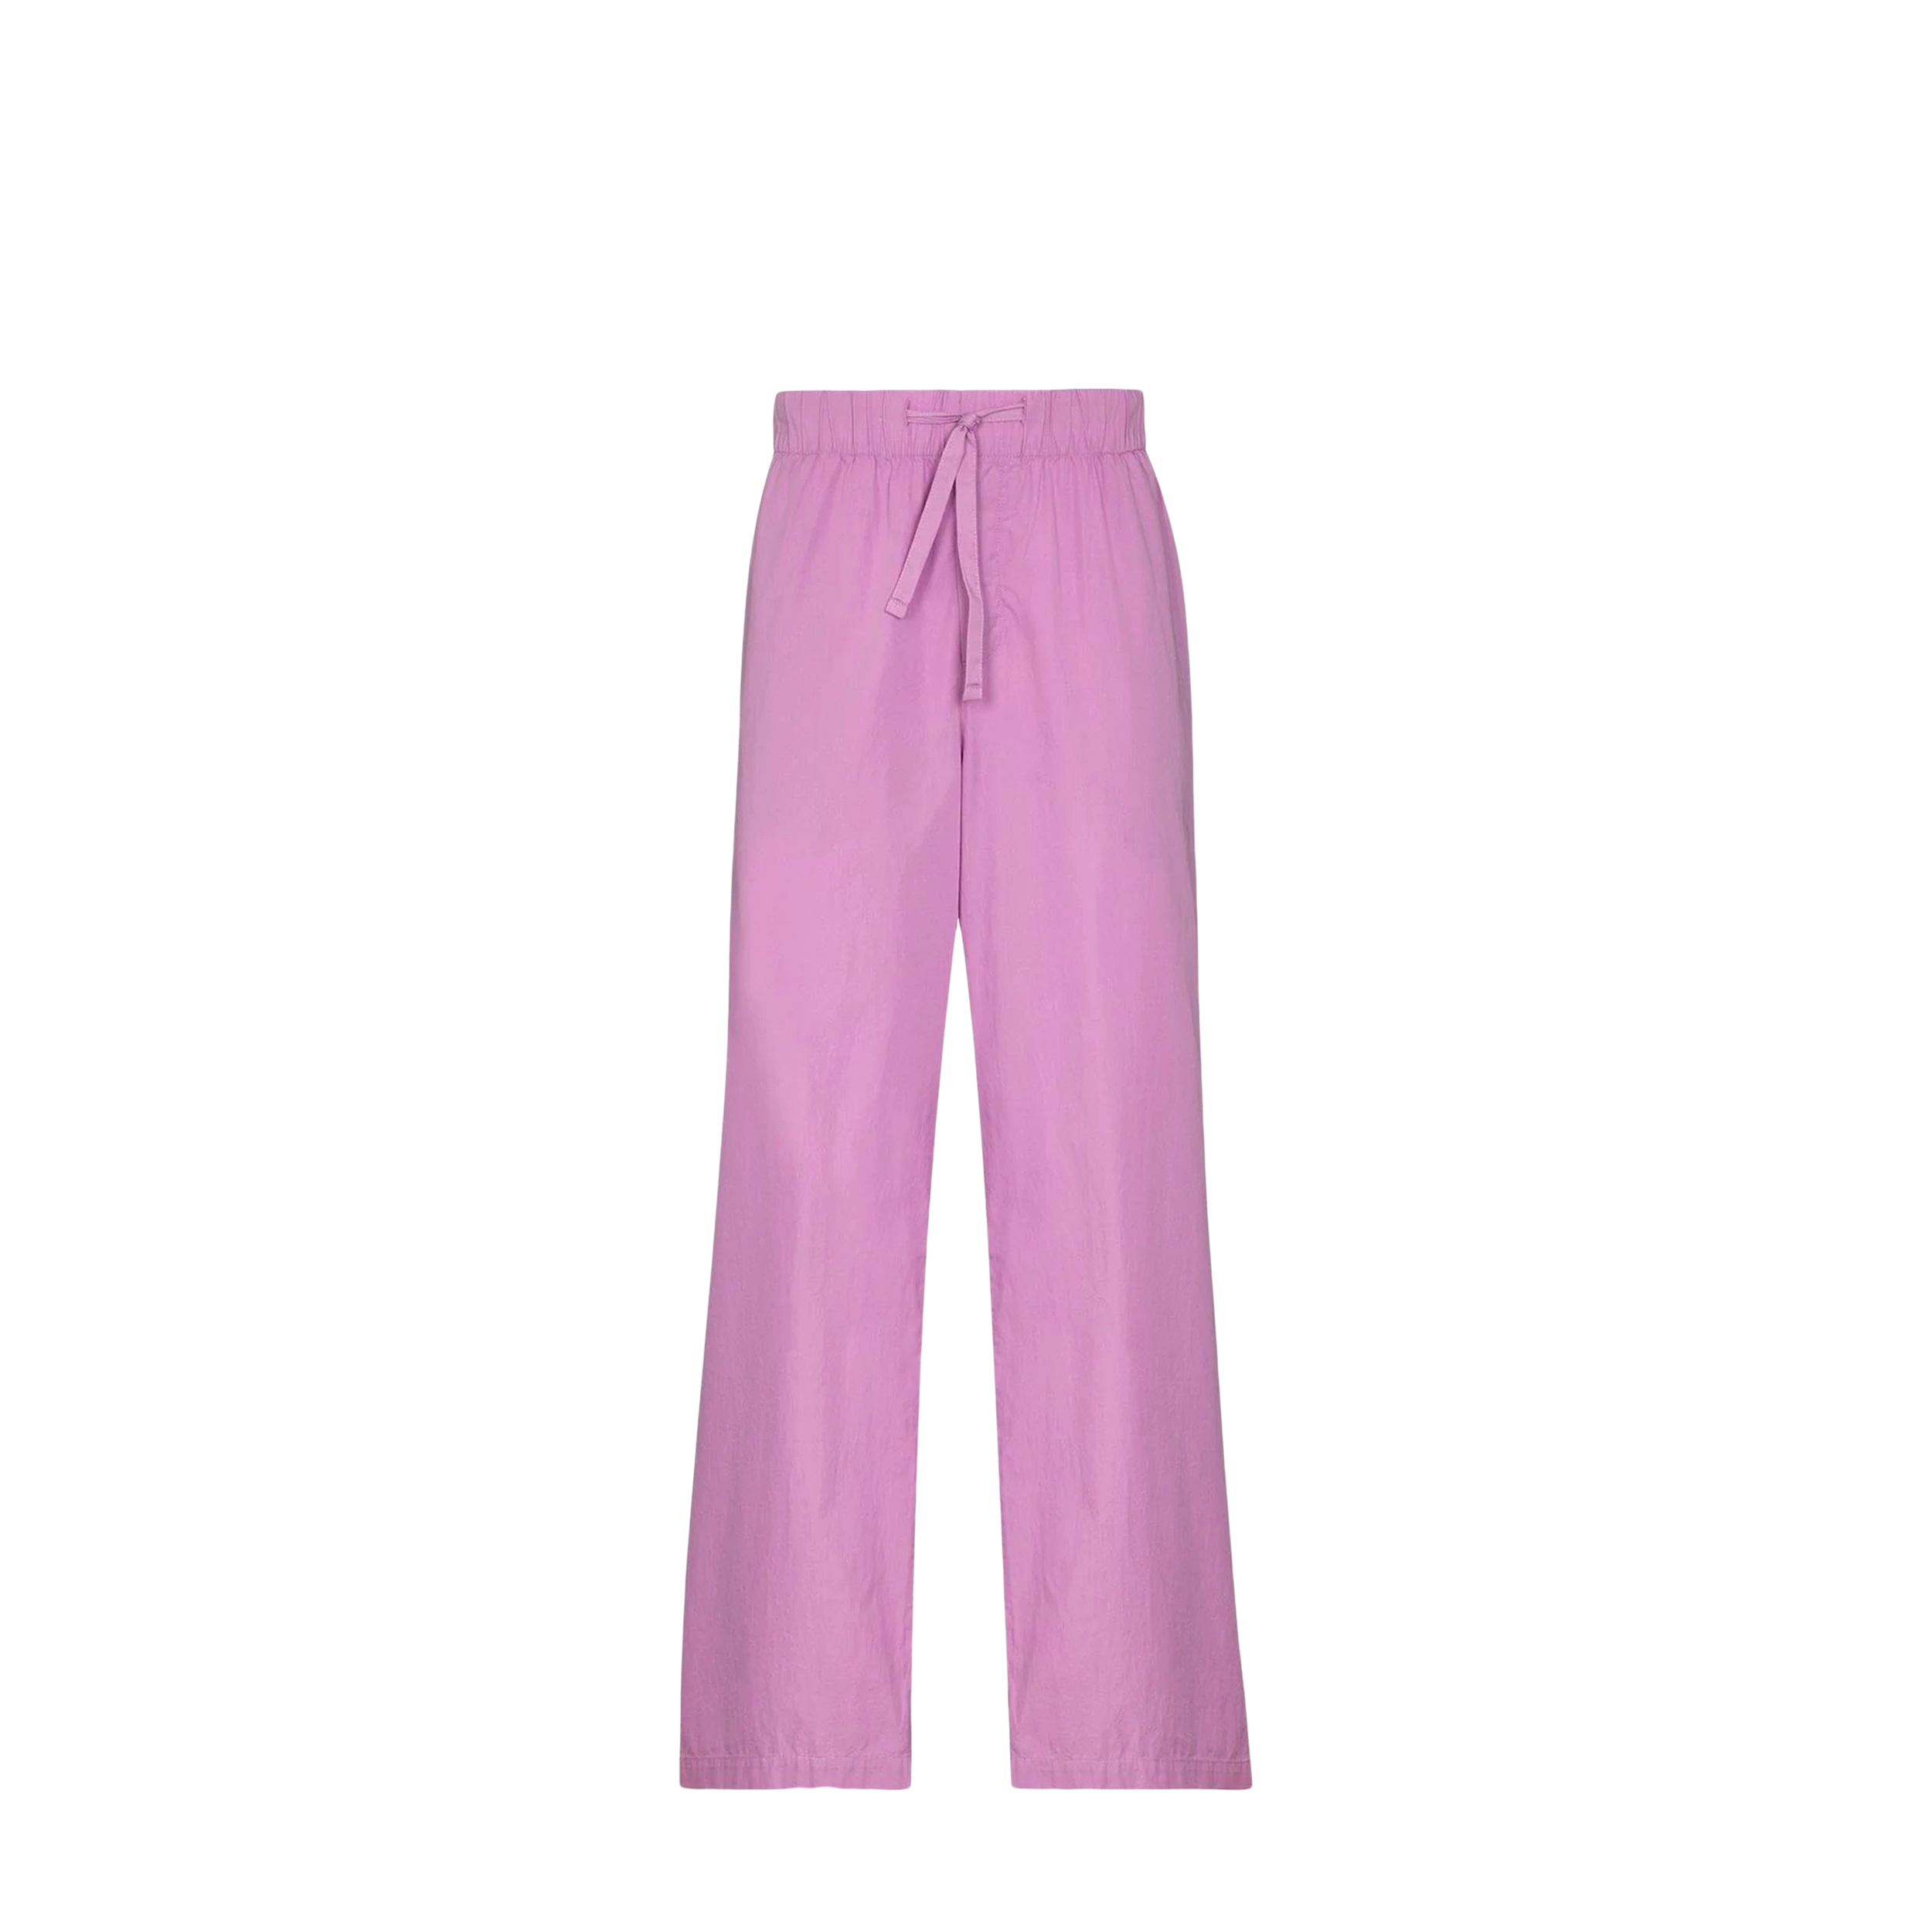 Tekla Tekla Poplin Pyjamas Pants Pink (L) SWP-PP Poplin Pyjamas Pants Pink (L) - фото 1